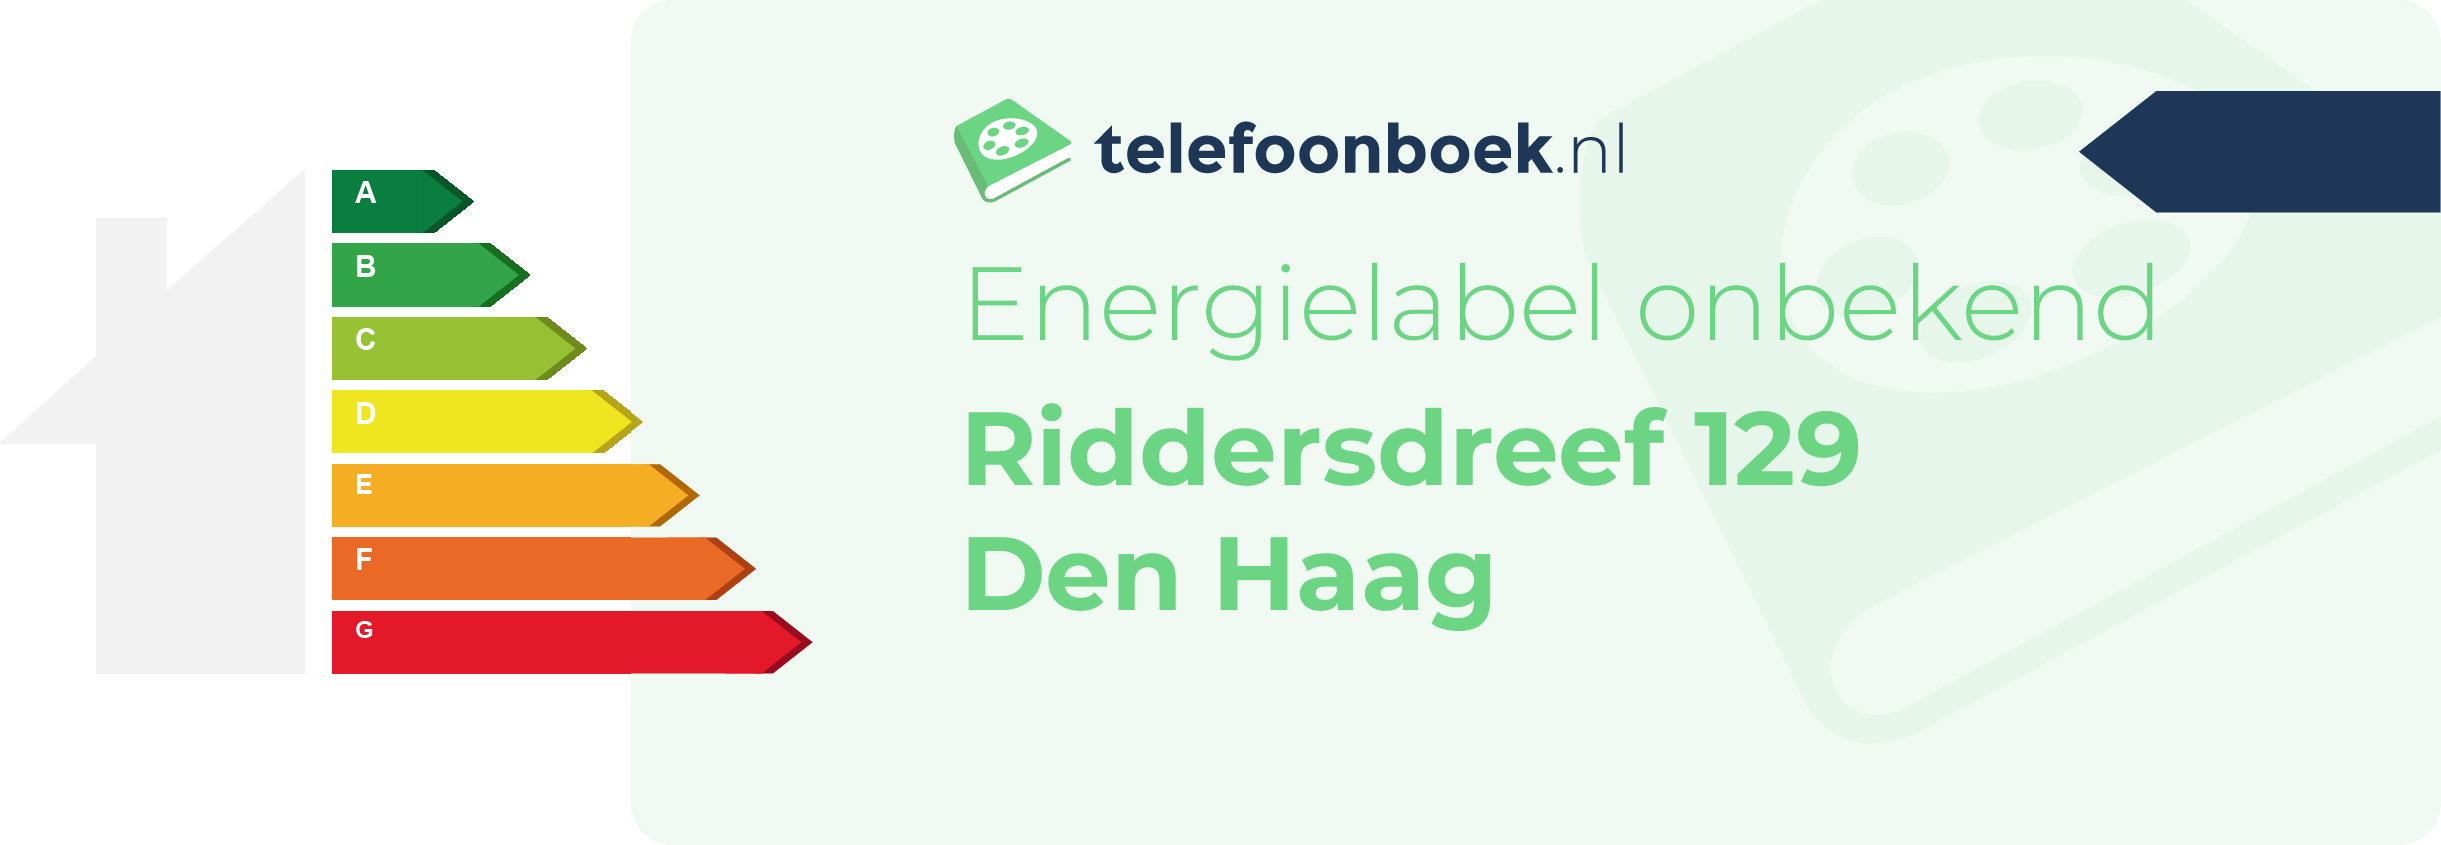 Energielabel Riddersdreef 129 Den Haag